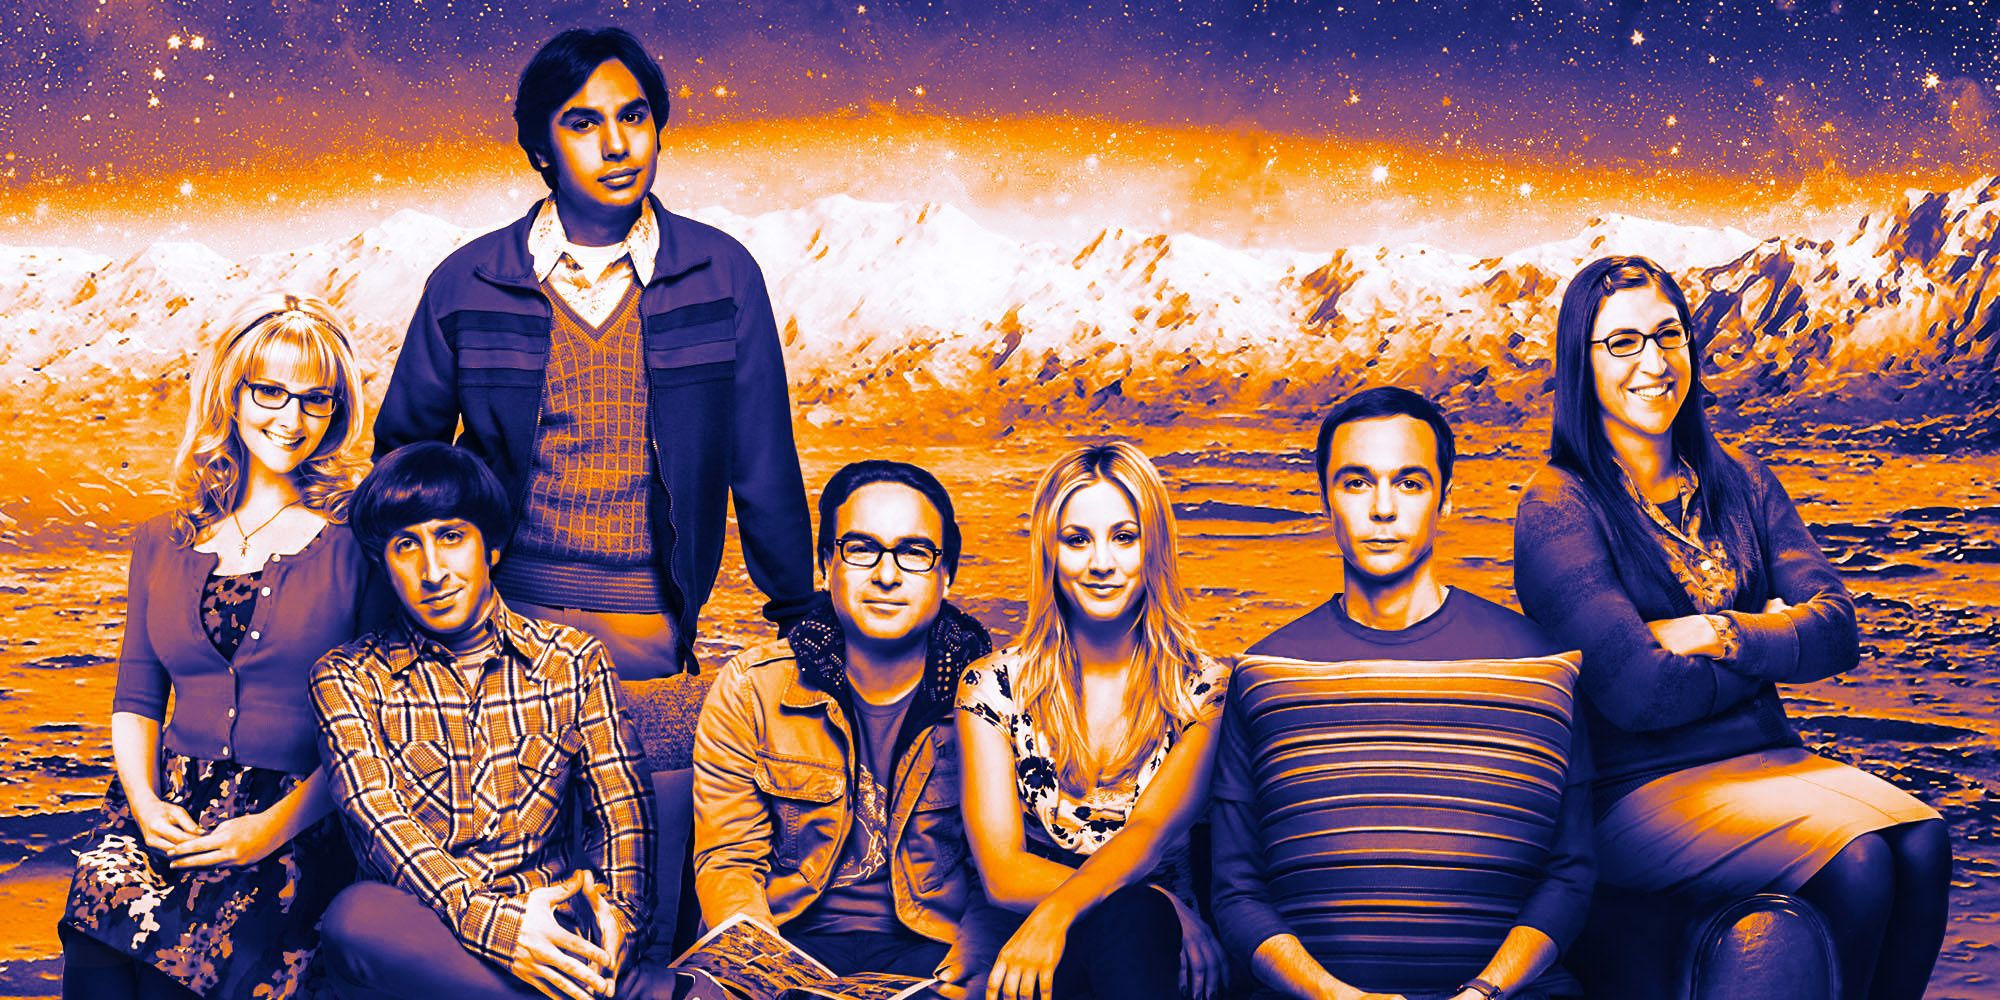 Leonard, Penny, Sheldon, Howard, Raj, and Amy sit on the sofa in The Big Bang Theory